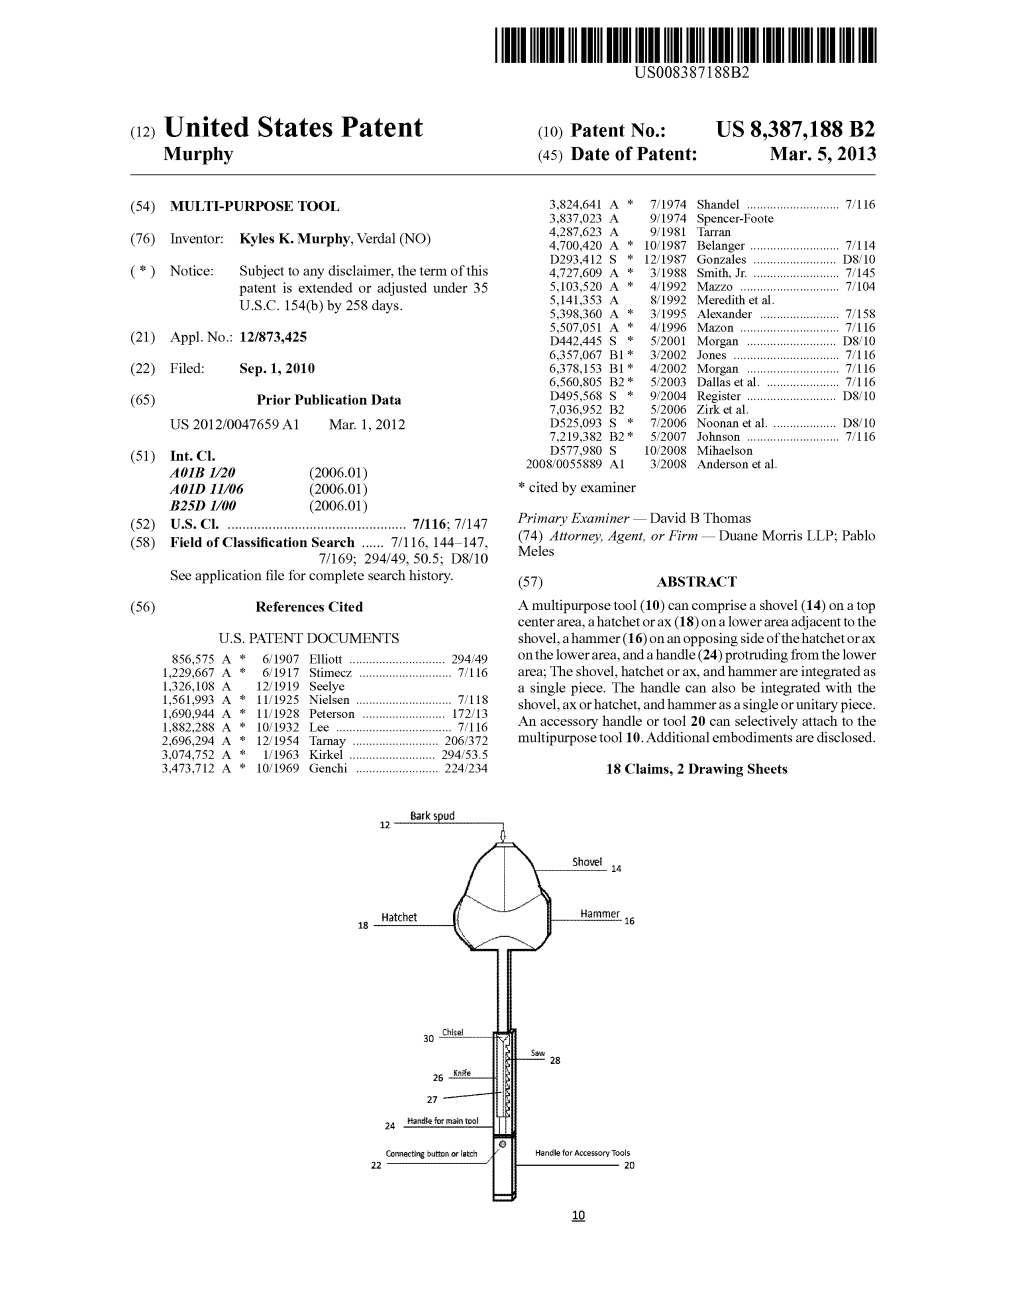 (12) United States Patent (10) Patent No.: US 8,387,188 B2 Murphy (45) Date of Patent: Mar